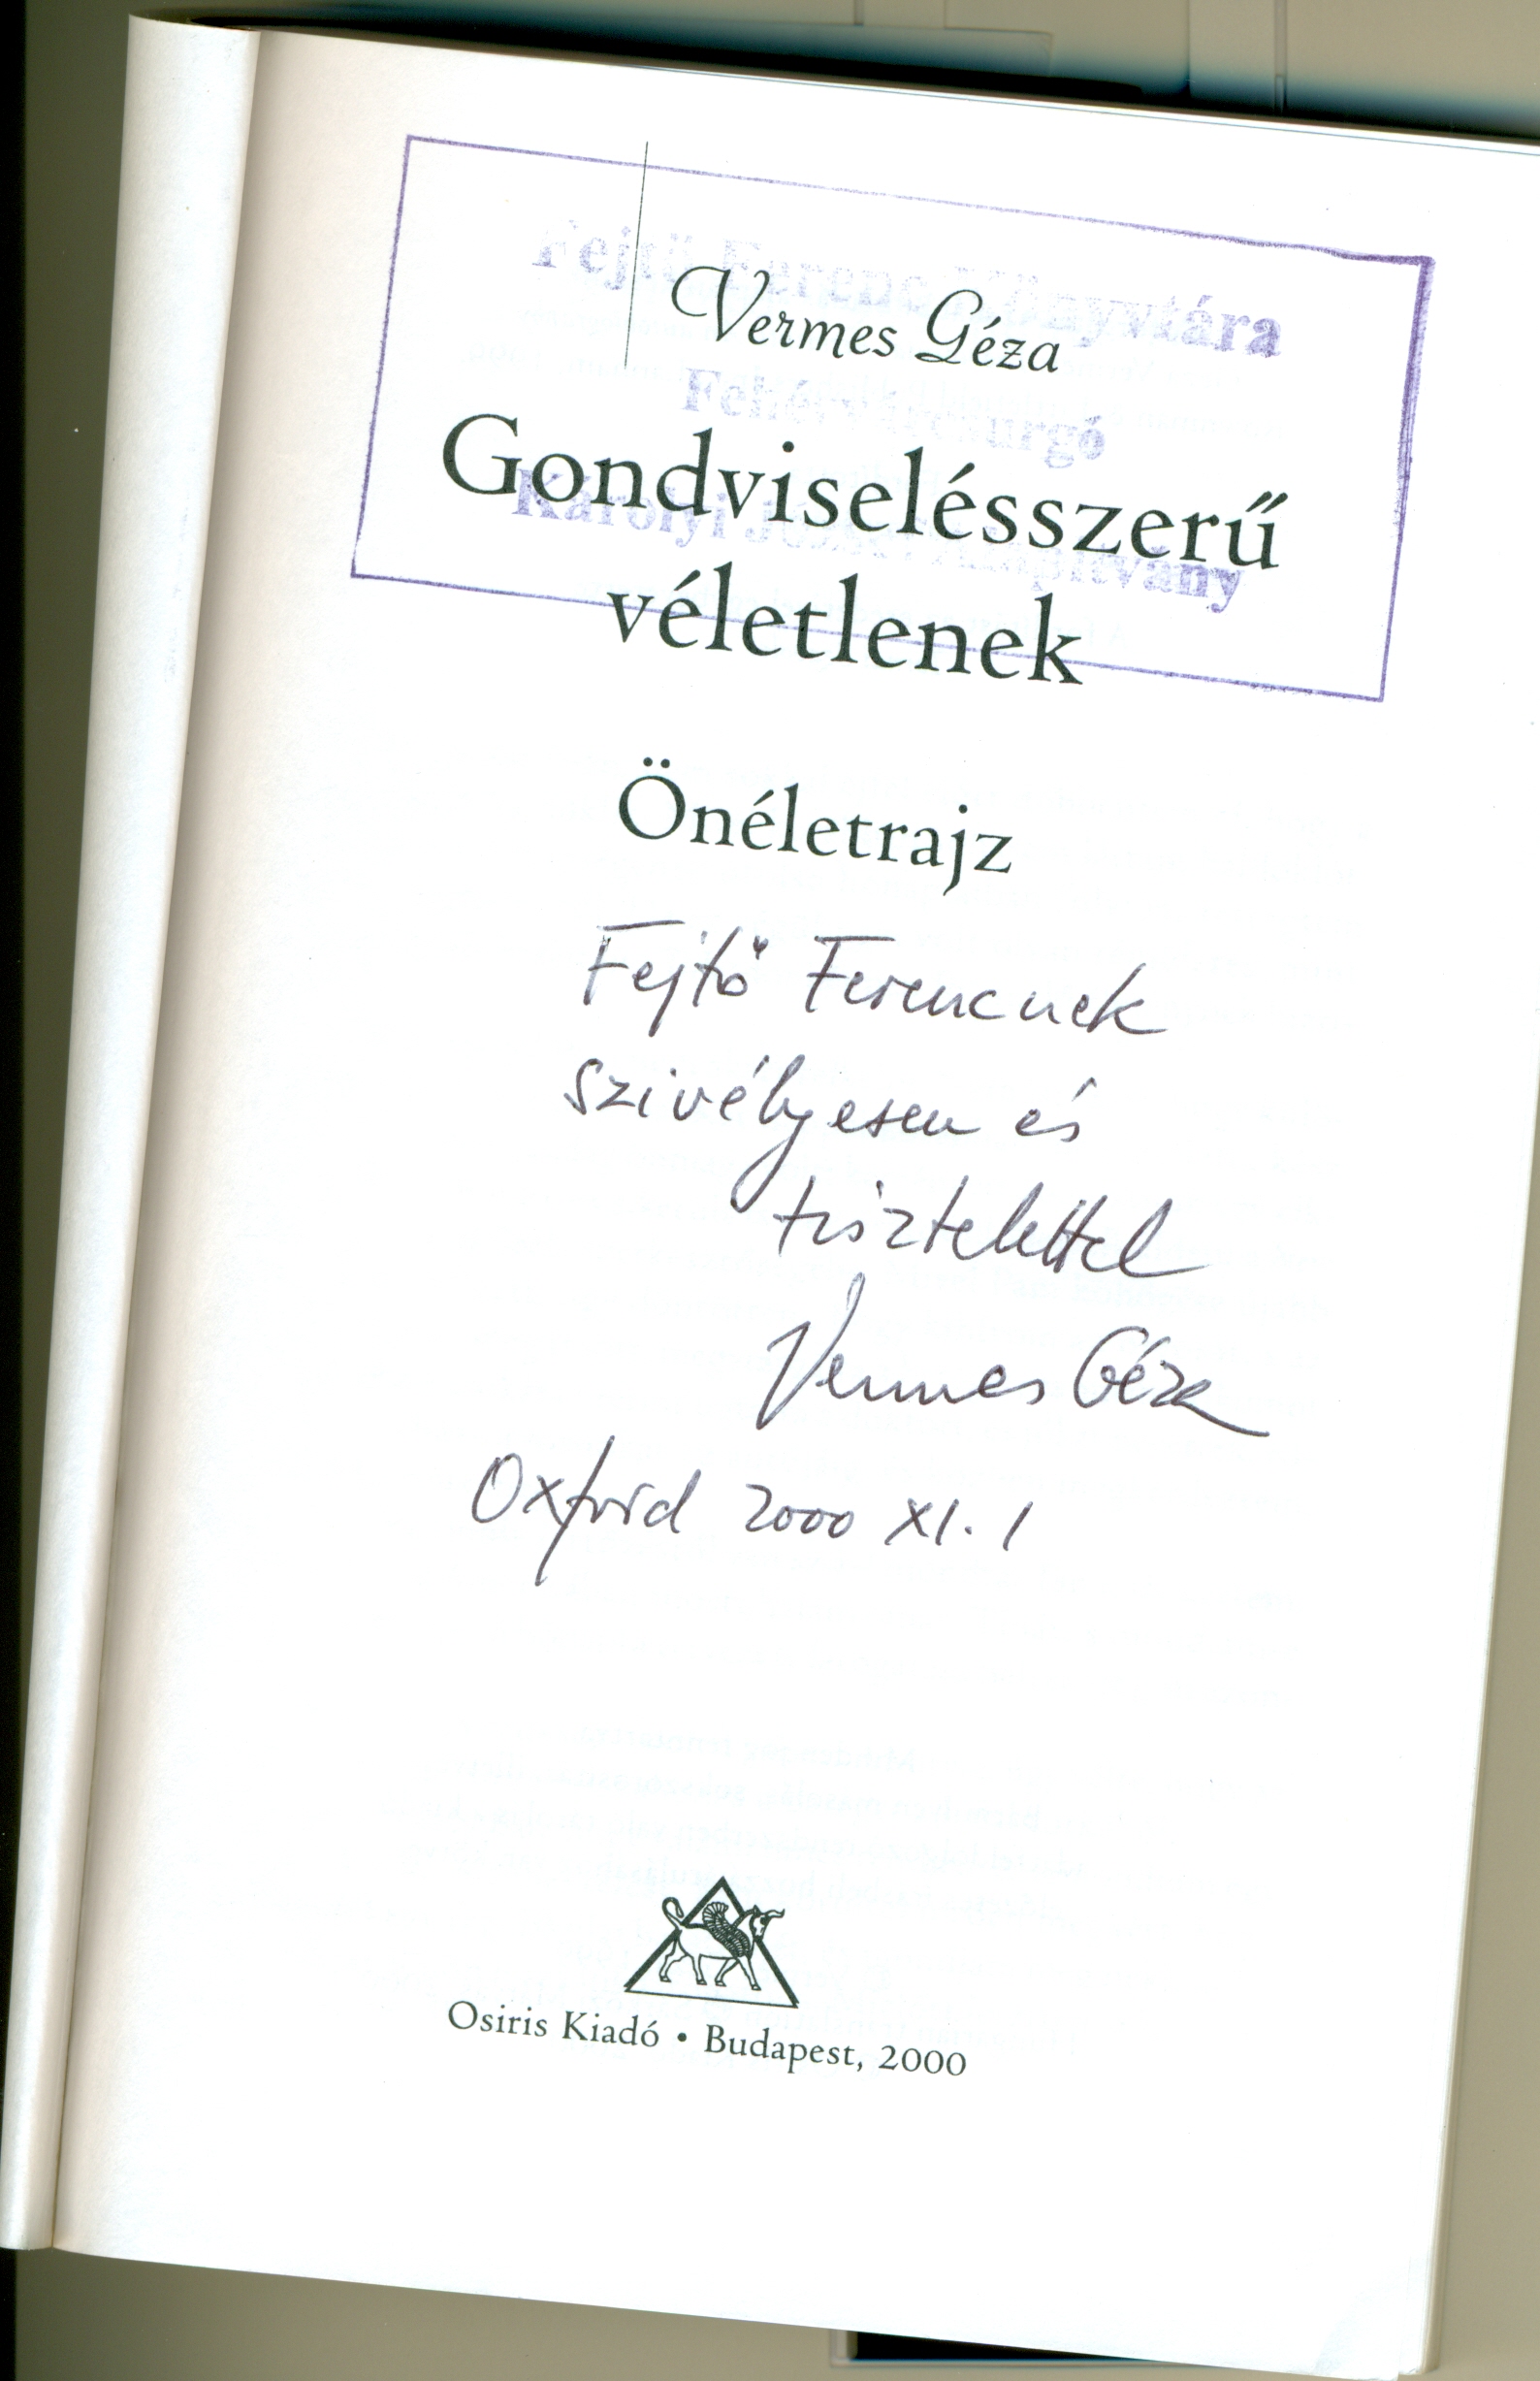 Géza Vermes's decication to Ferenc Fejtő, 2000.